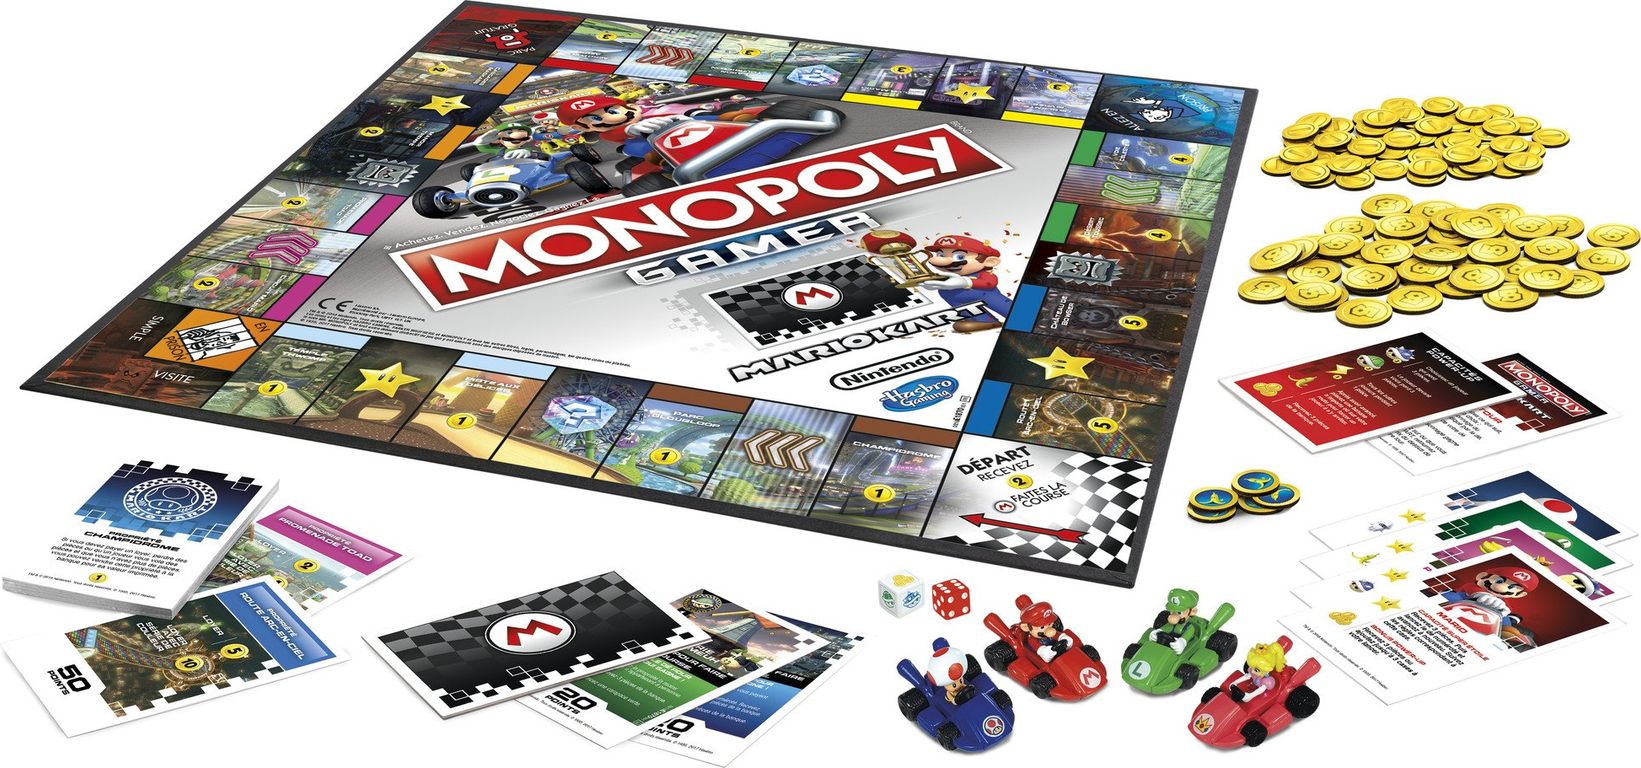 Monopoly Gamer: Mario Kart components